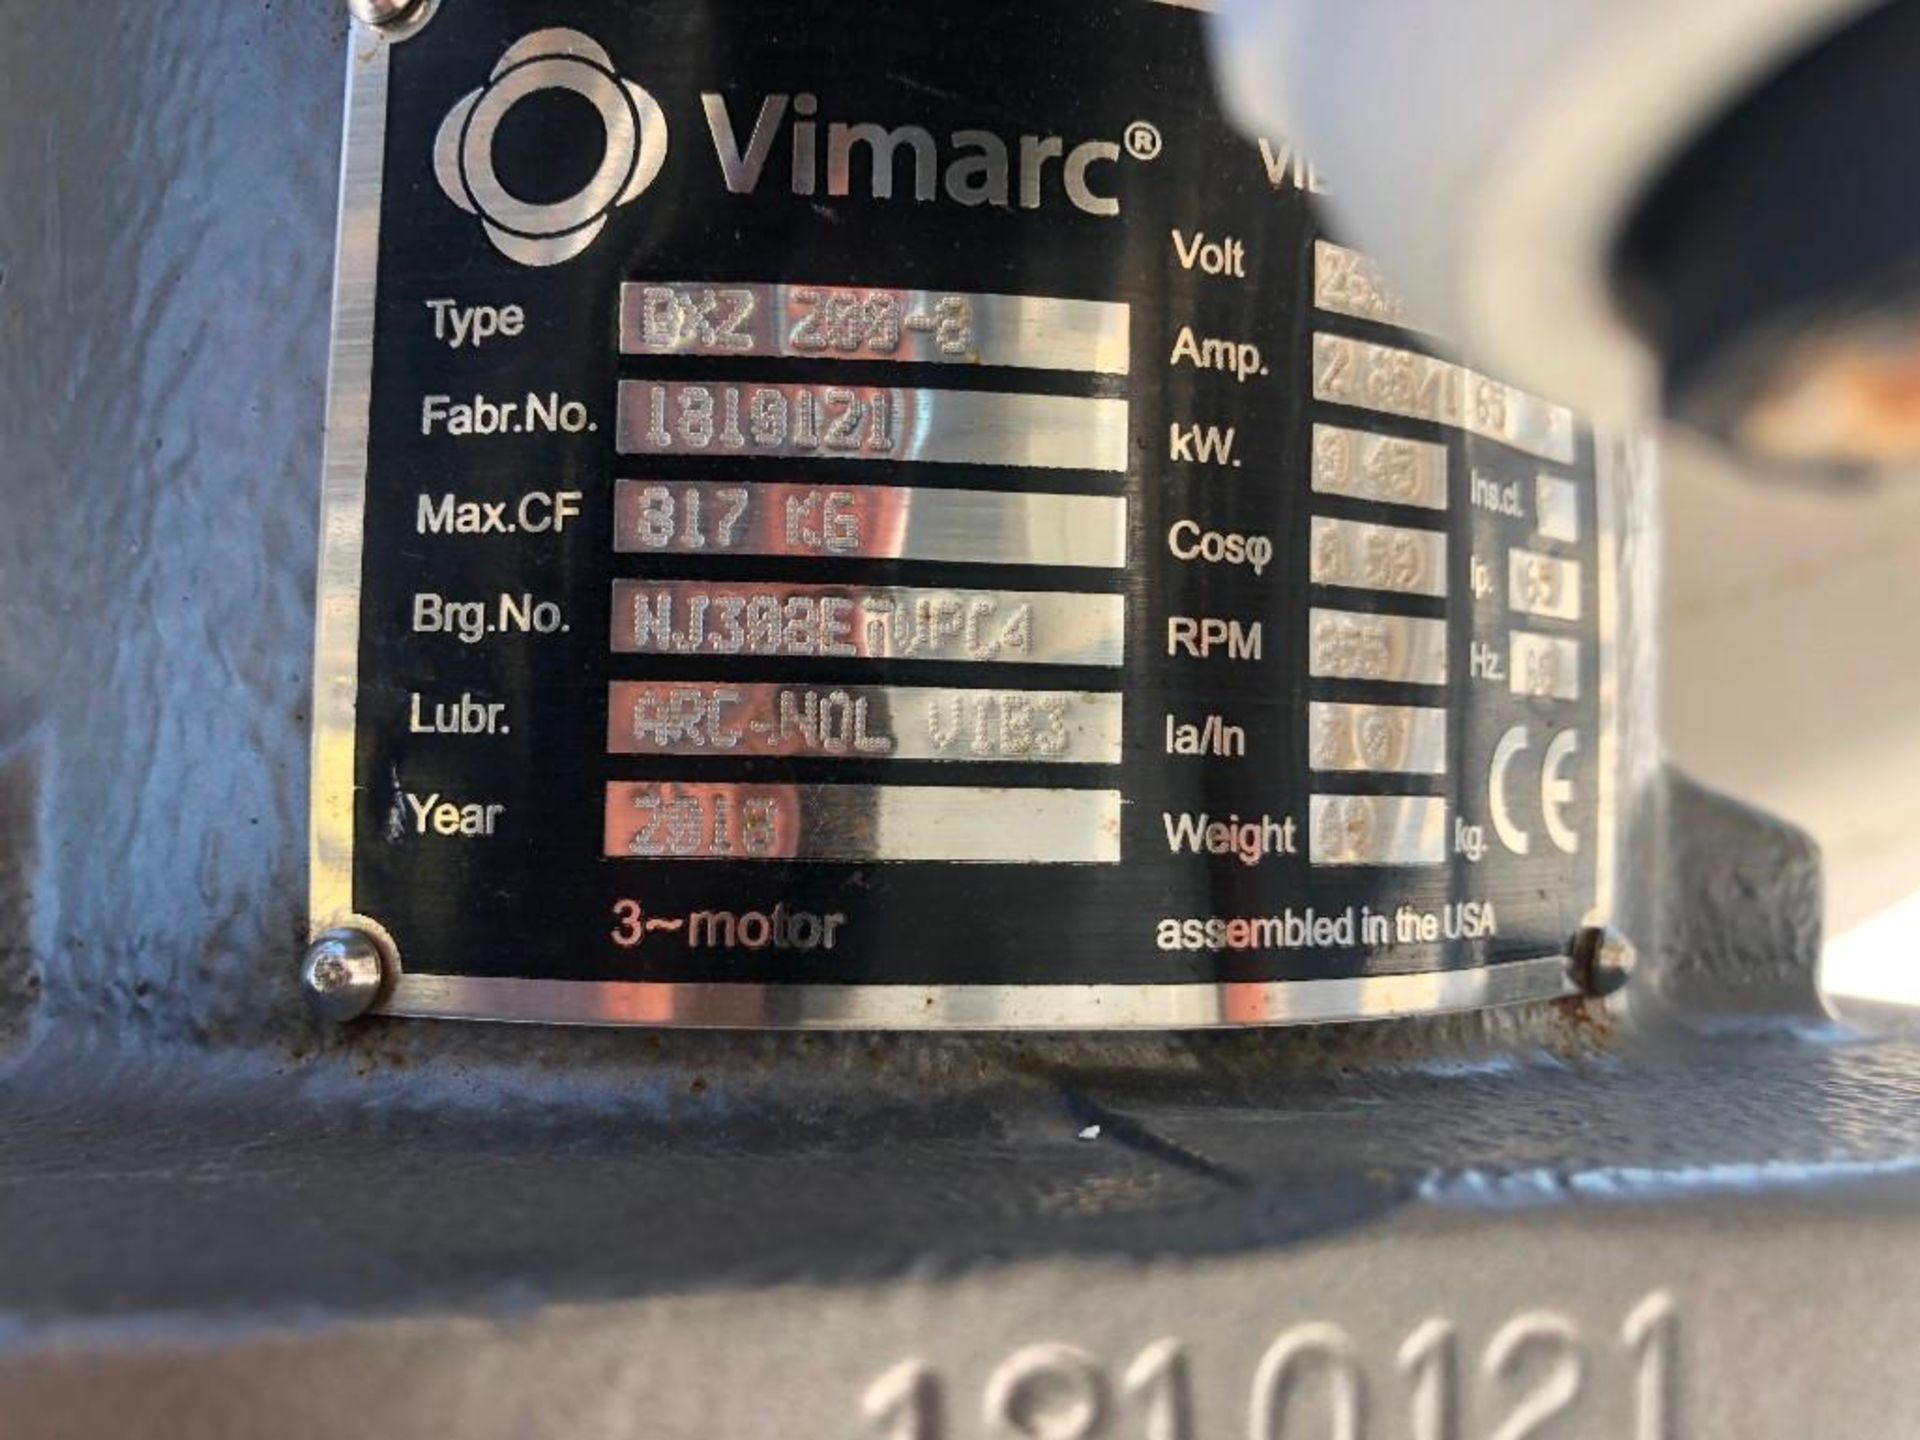 Reyco UV decontamination system with vibratory conveyors - Image 15 of 44